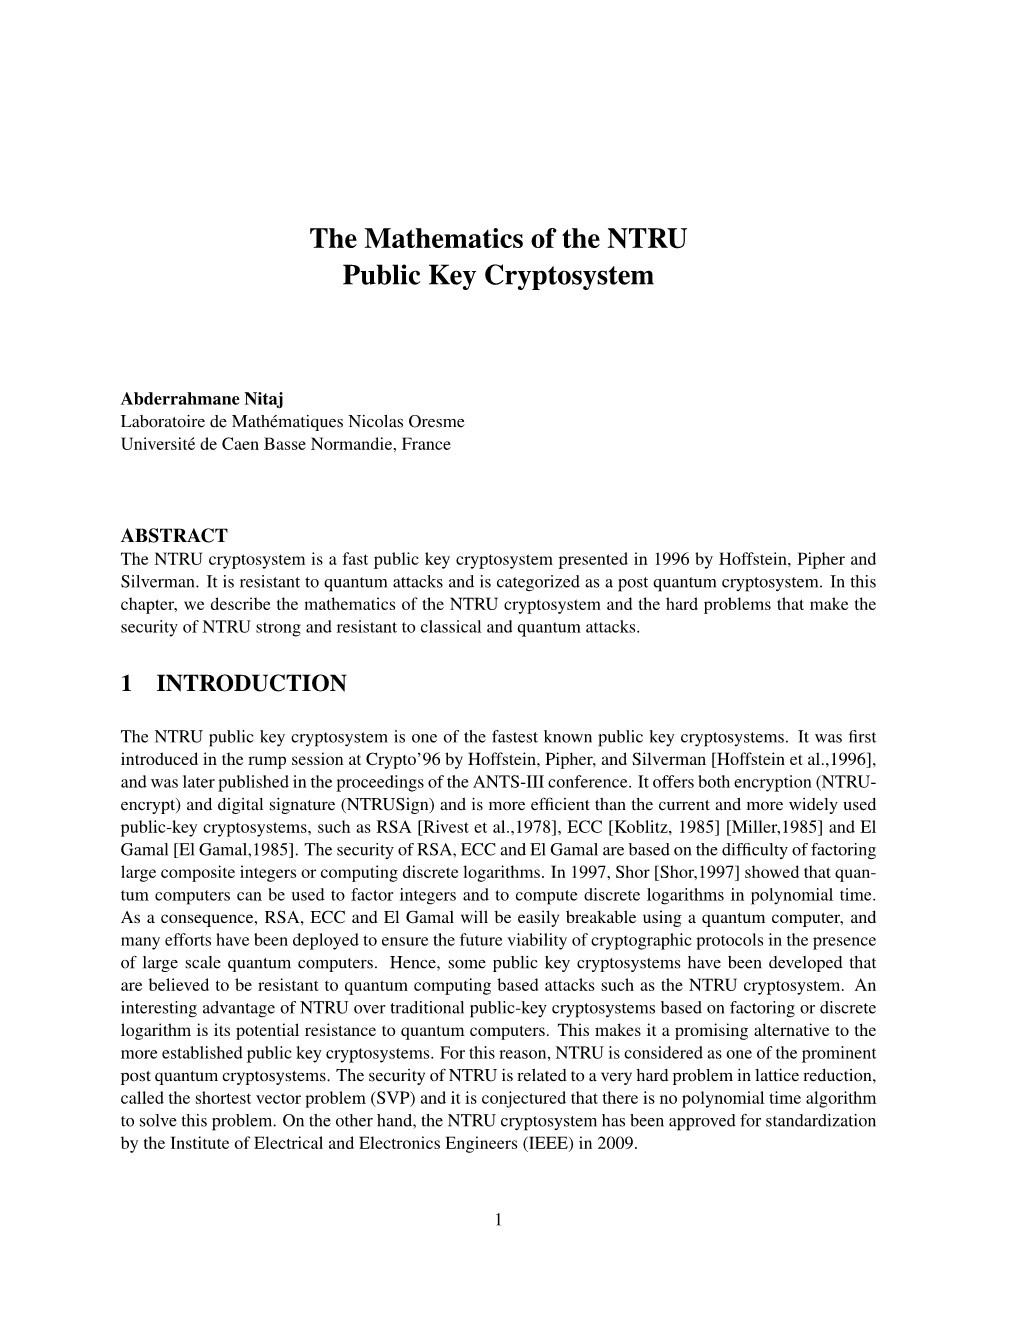 The Mathematics of the NTRU Public Key Cryptosystem